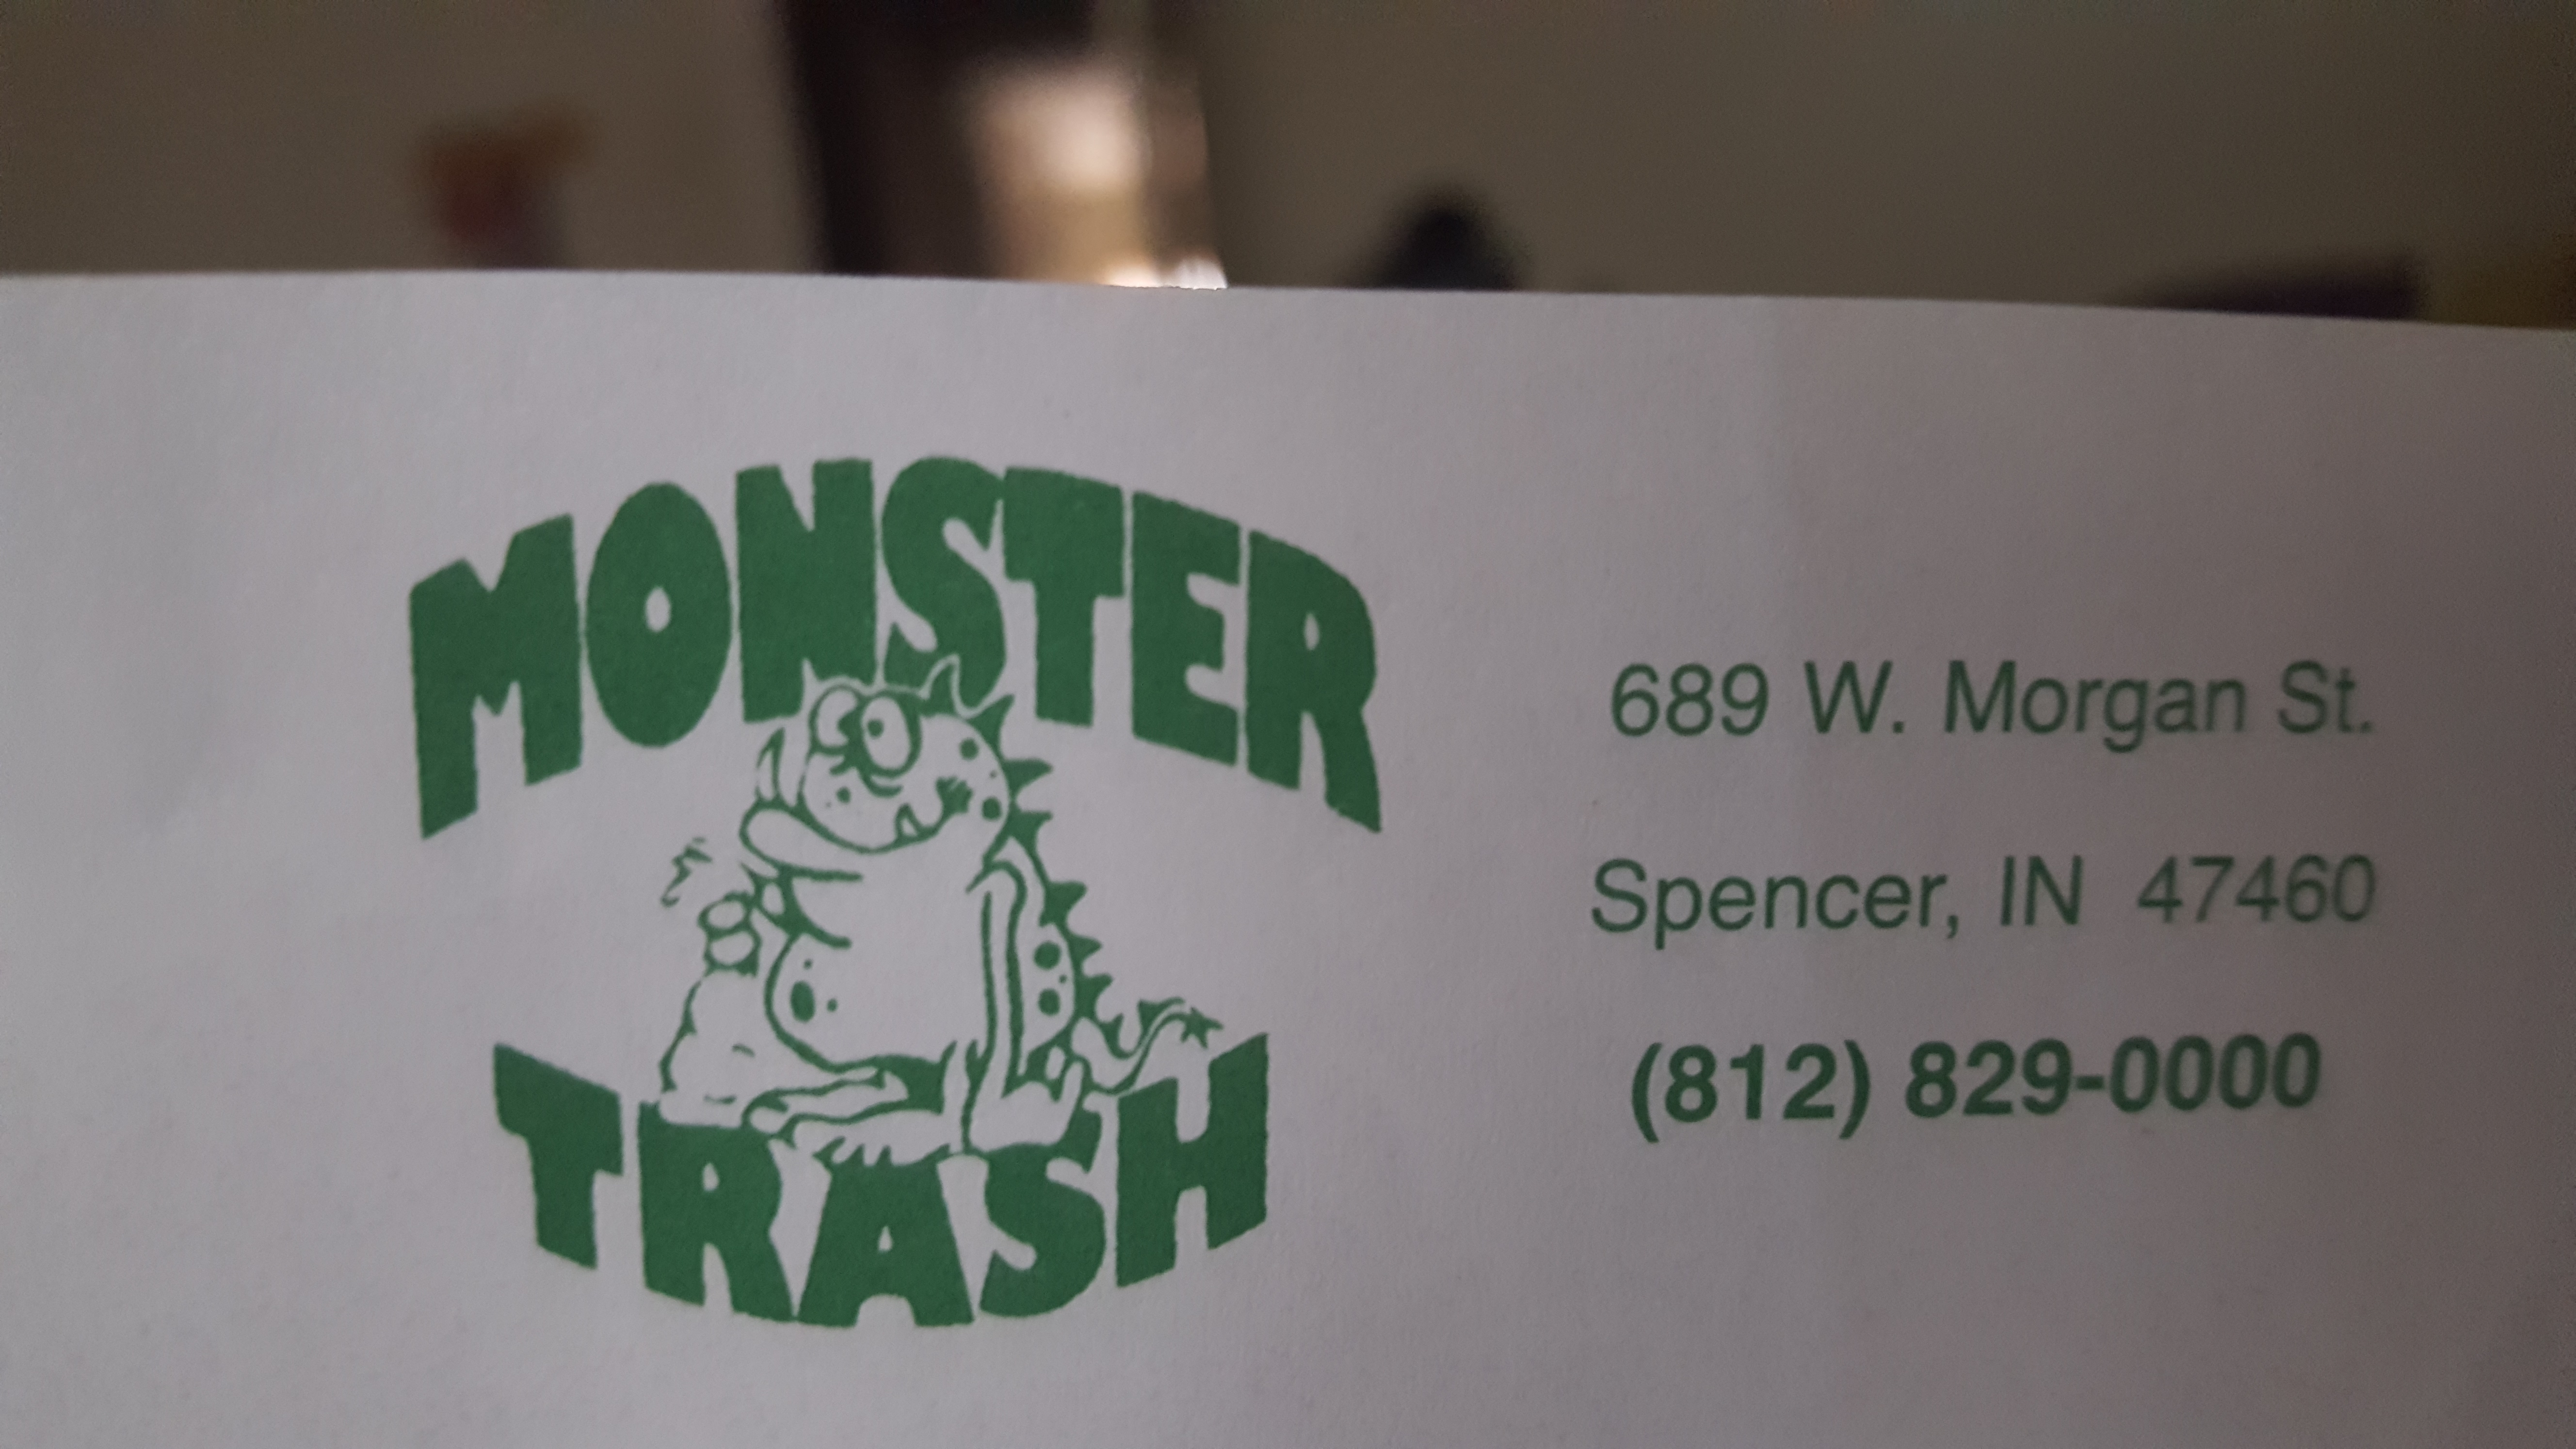 The true monster of trash